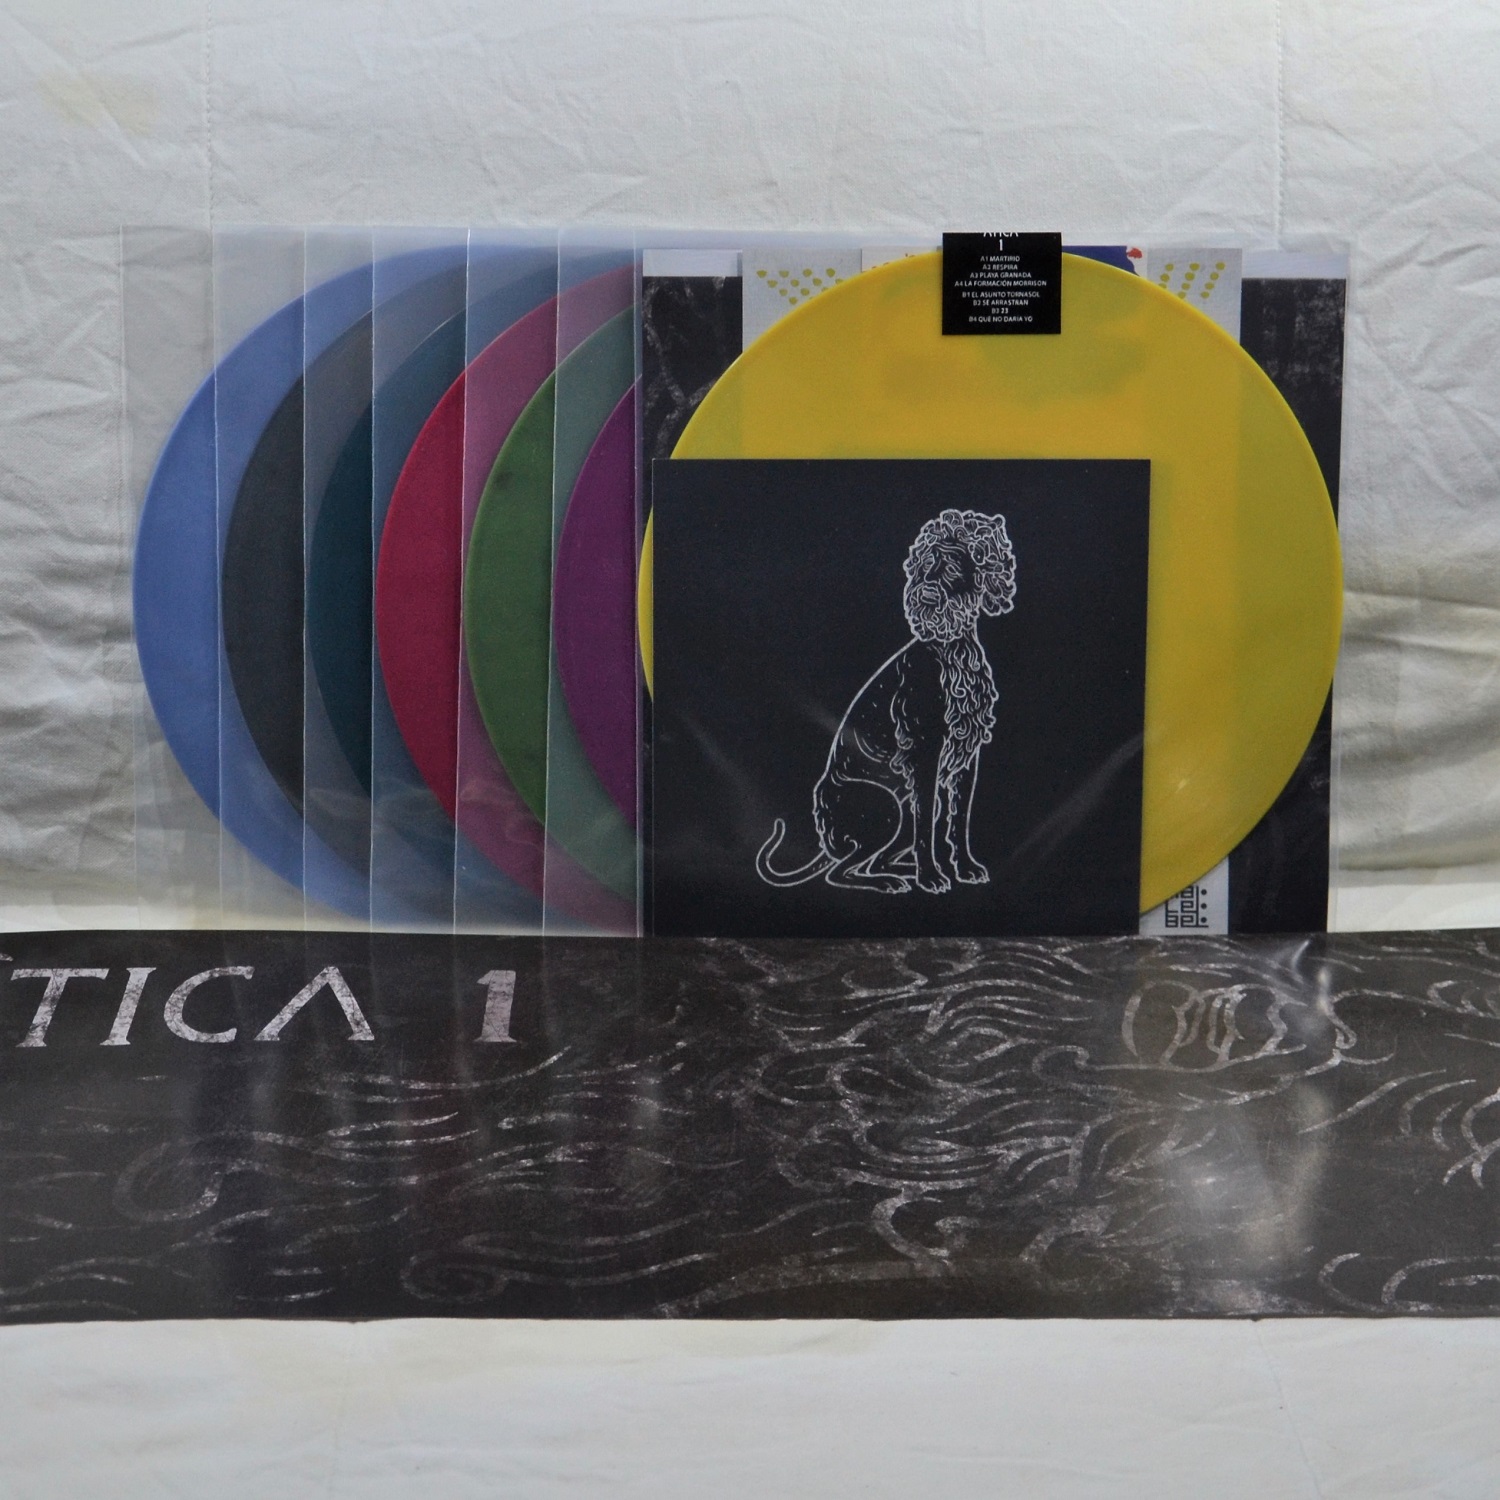 Ática "1" - EP [Multicoloured 12" vinyl]